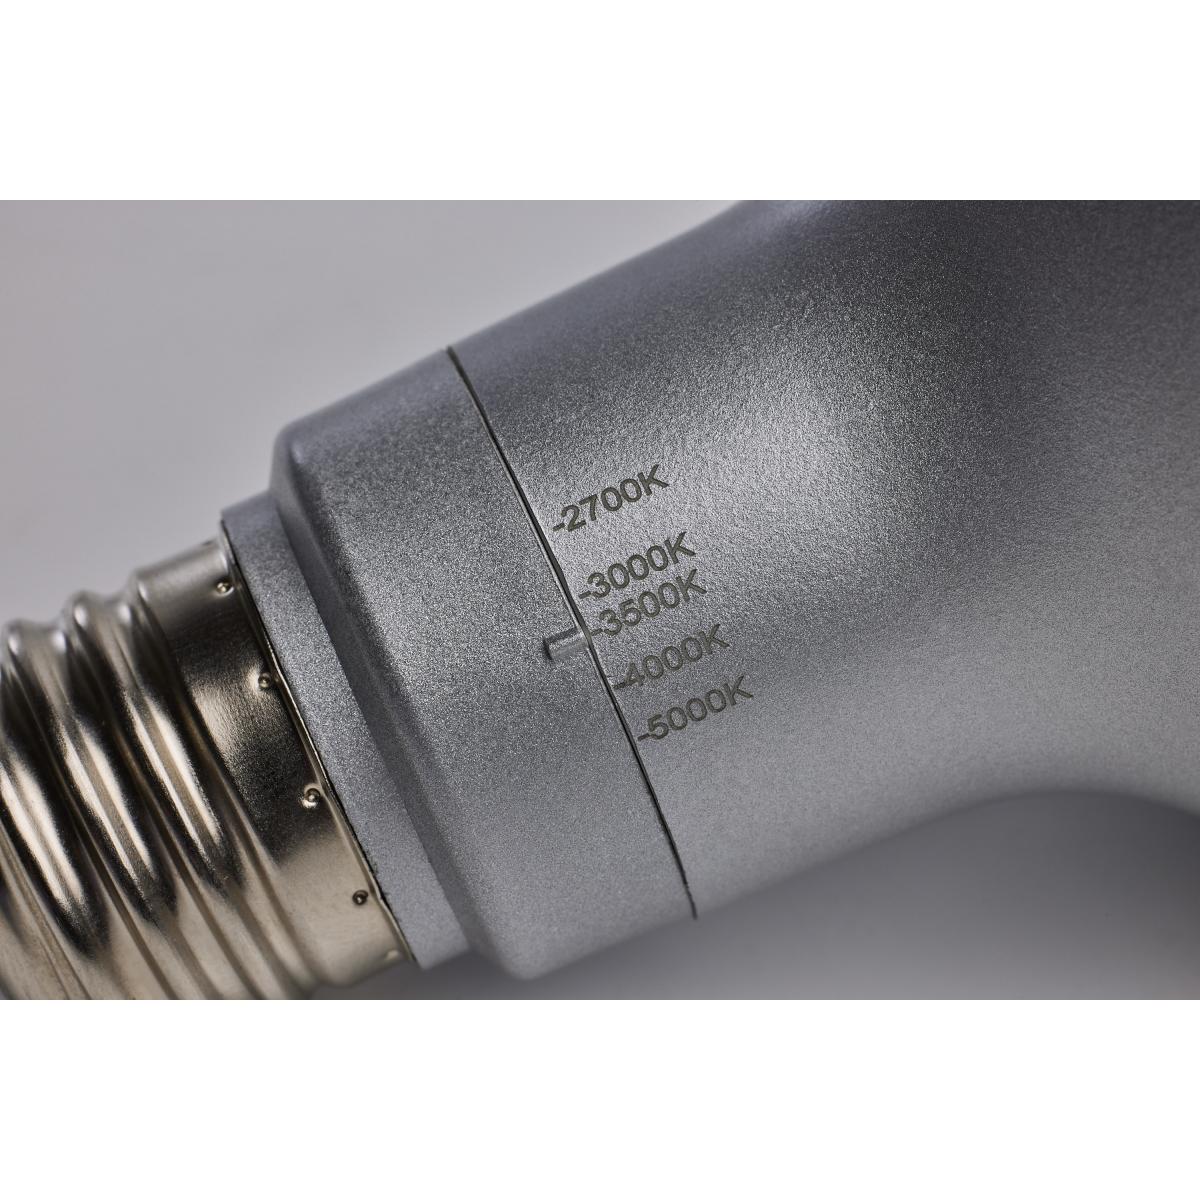 PAR38 Reflector LED Bulb, 13 Watt, 1200 Lumens, Selectable CCT 2700K to 5000K, E26 Medium Base, 25 Deg. Spot